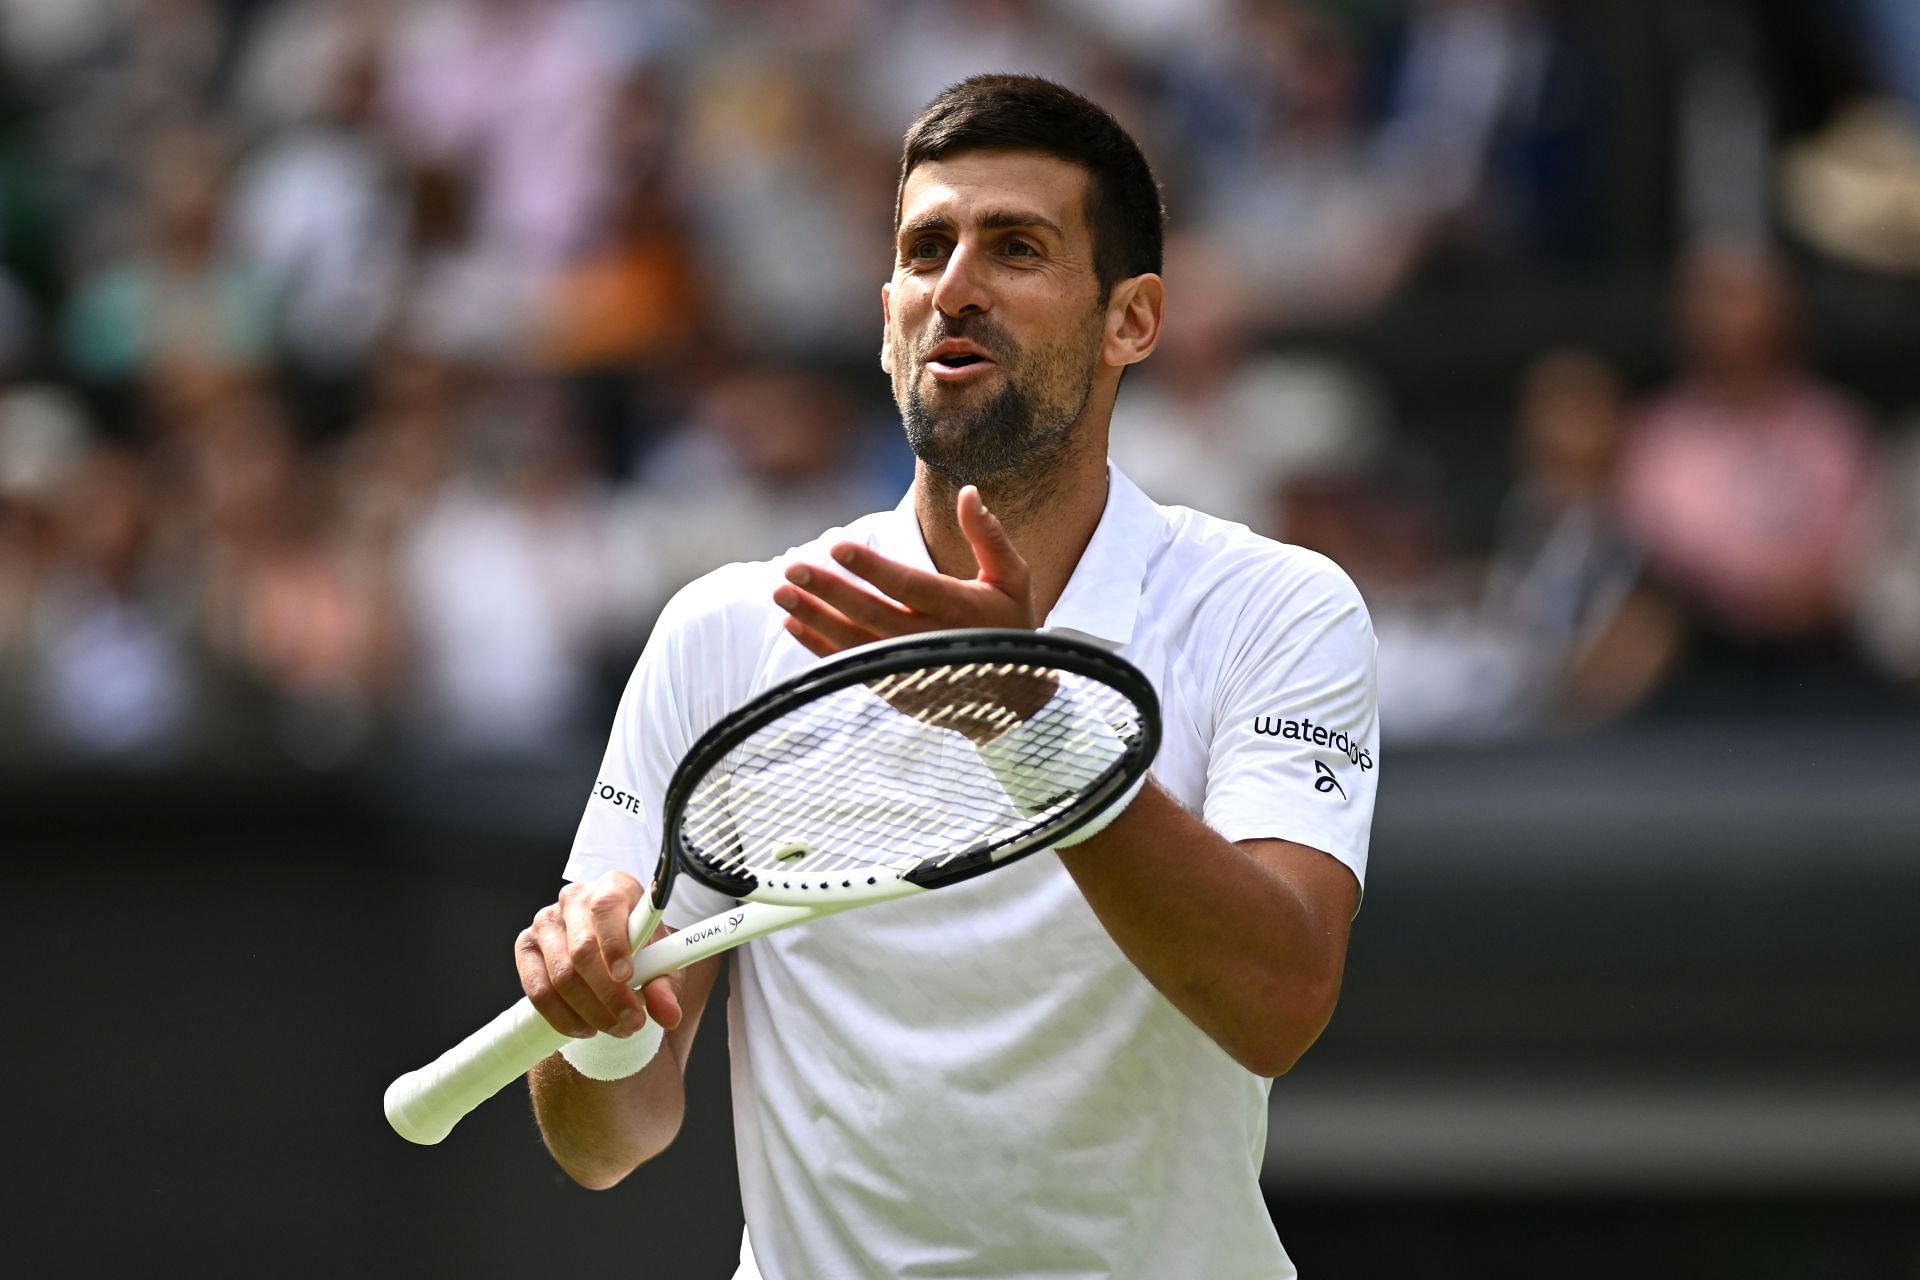 Djokovic is into his 14th Wimbledon quarterfinal.